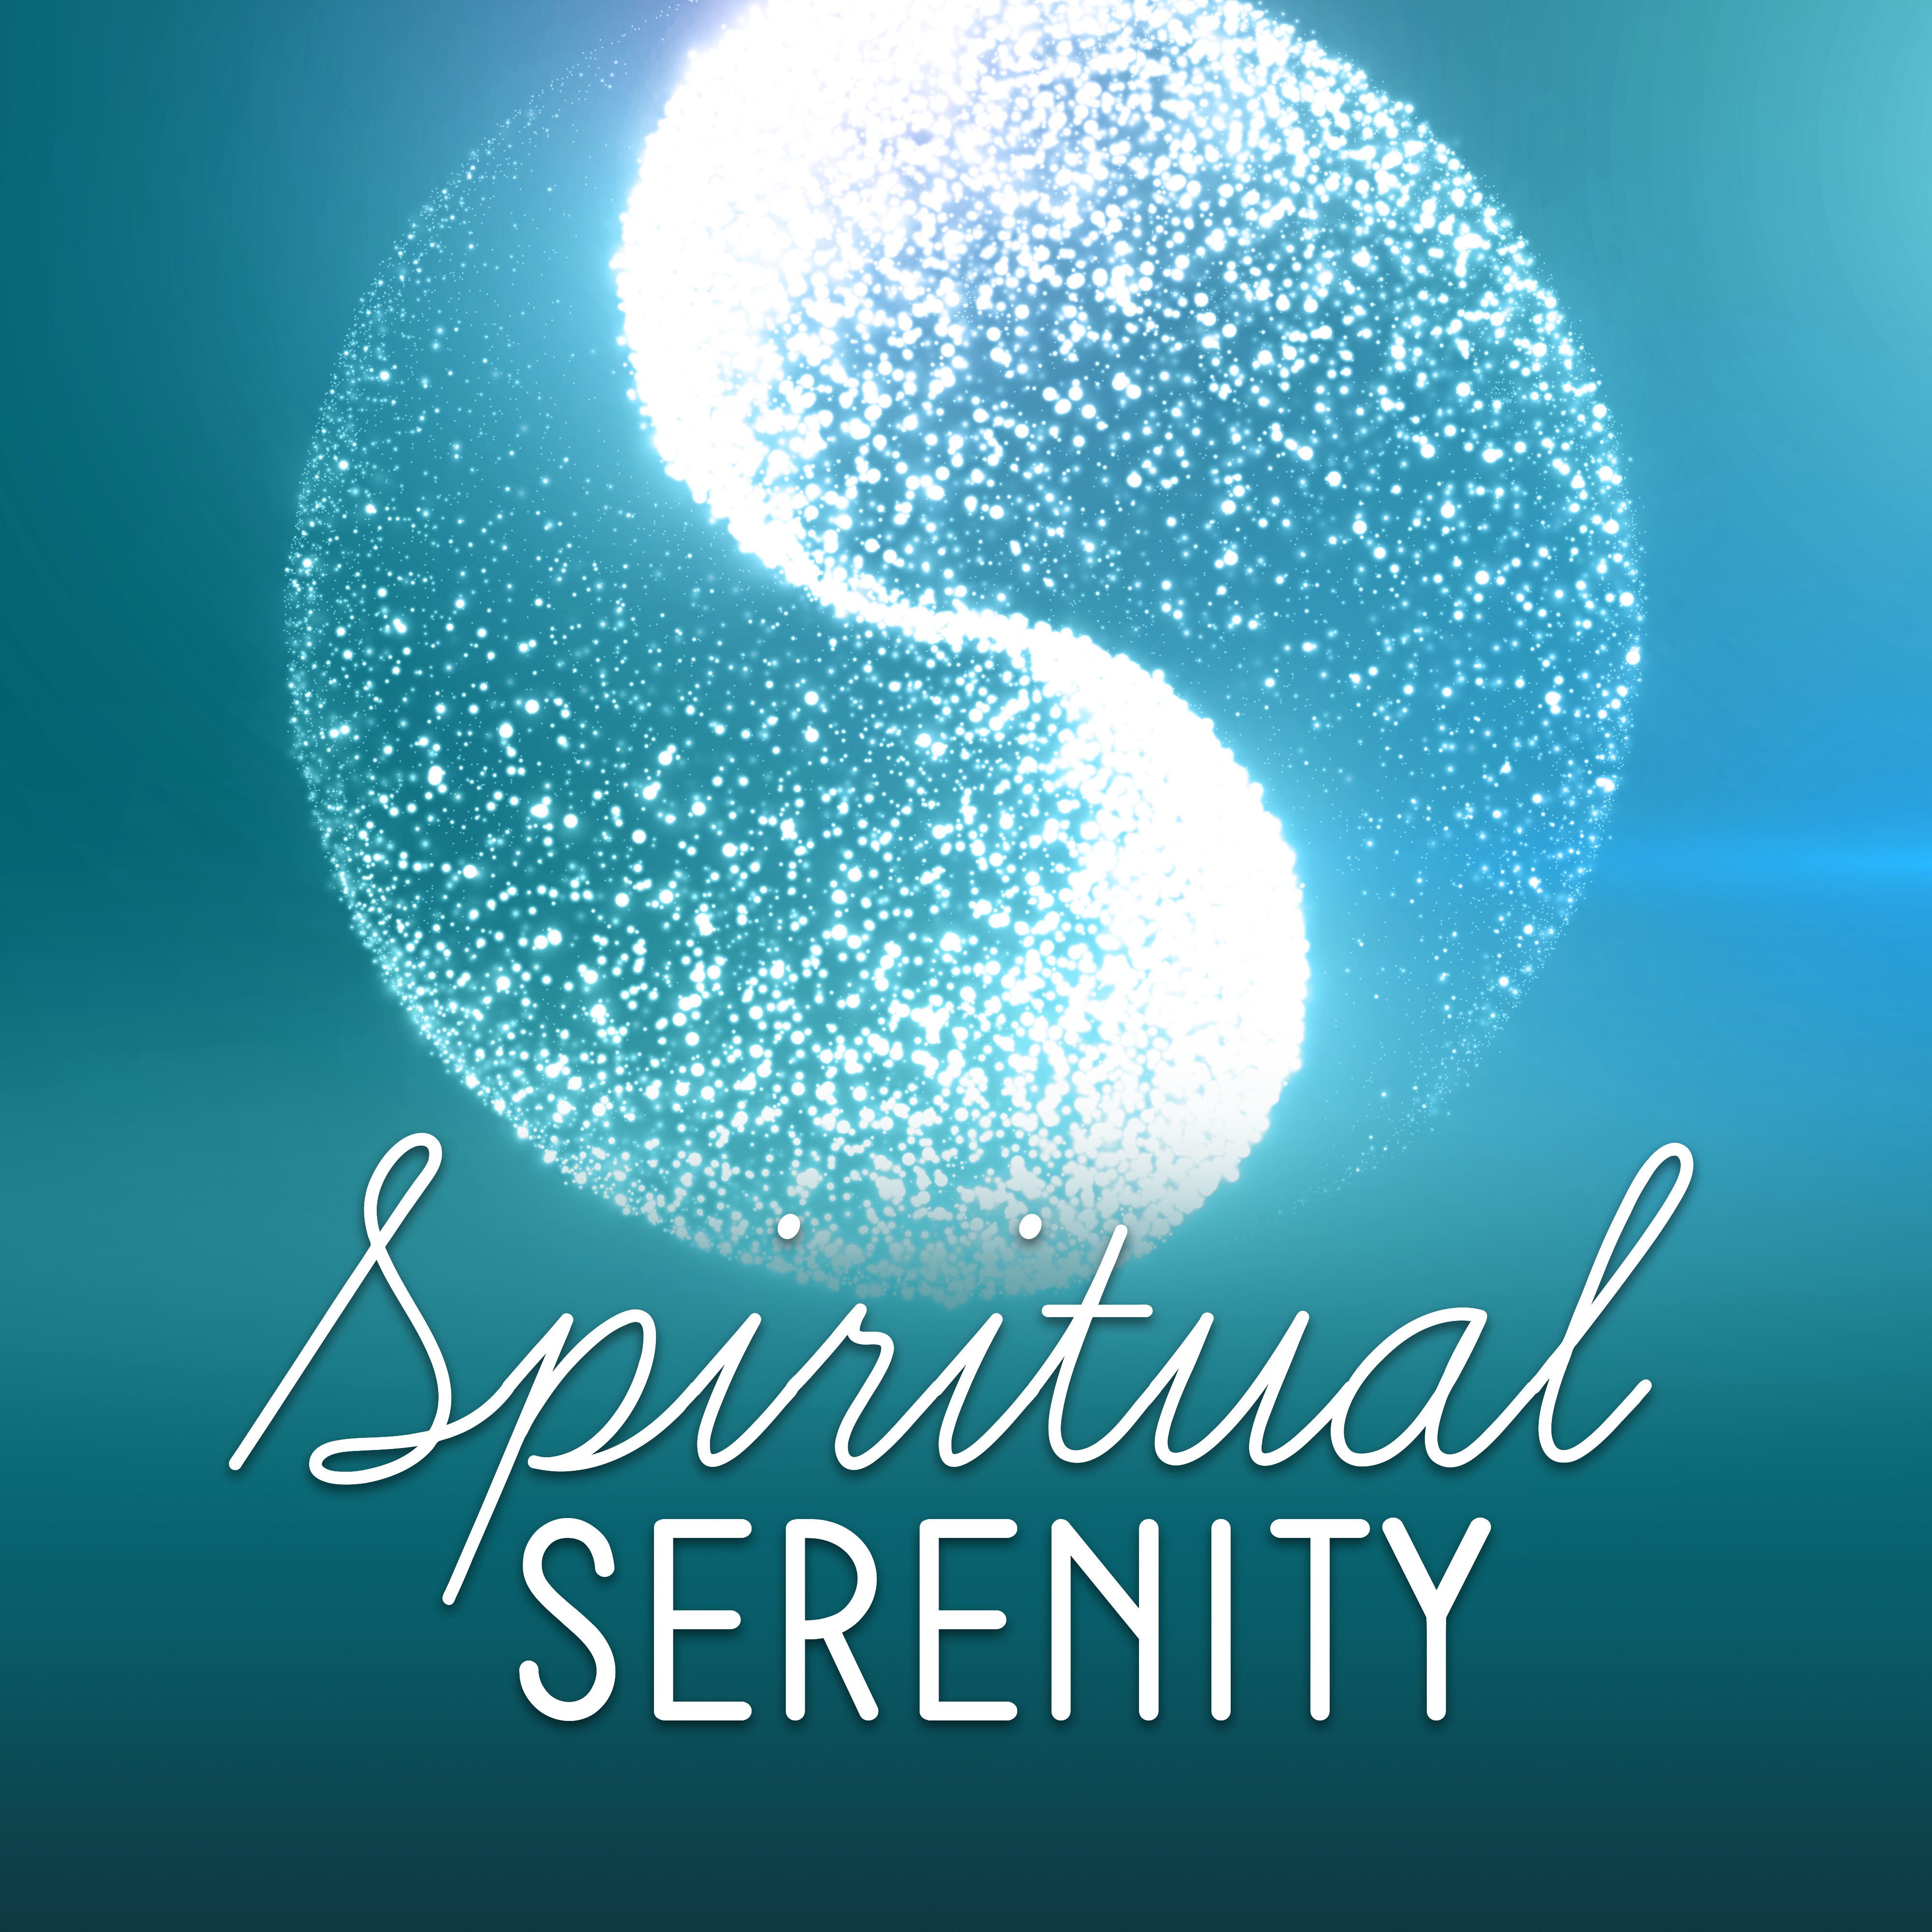 Spiritual Serenity